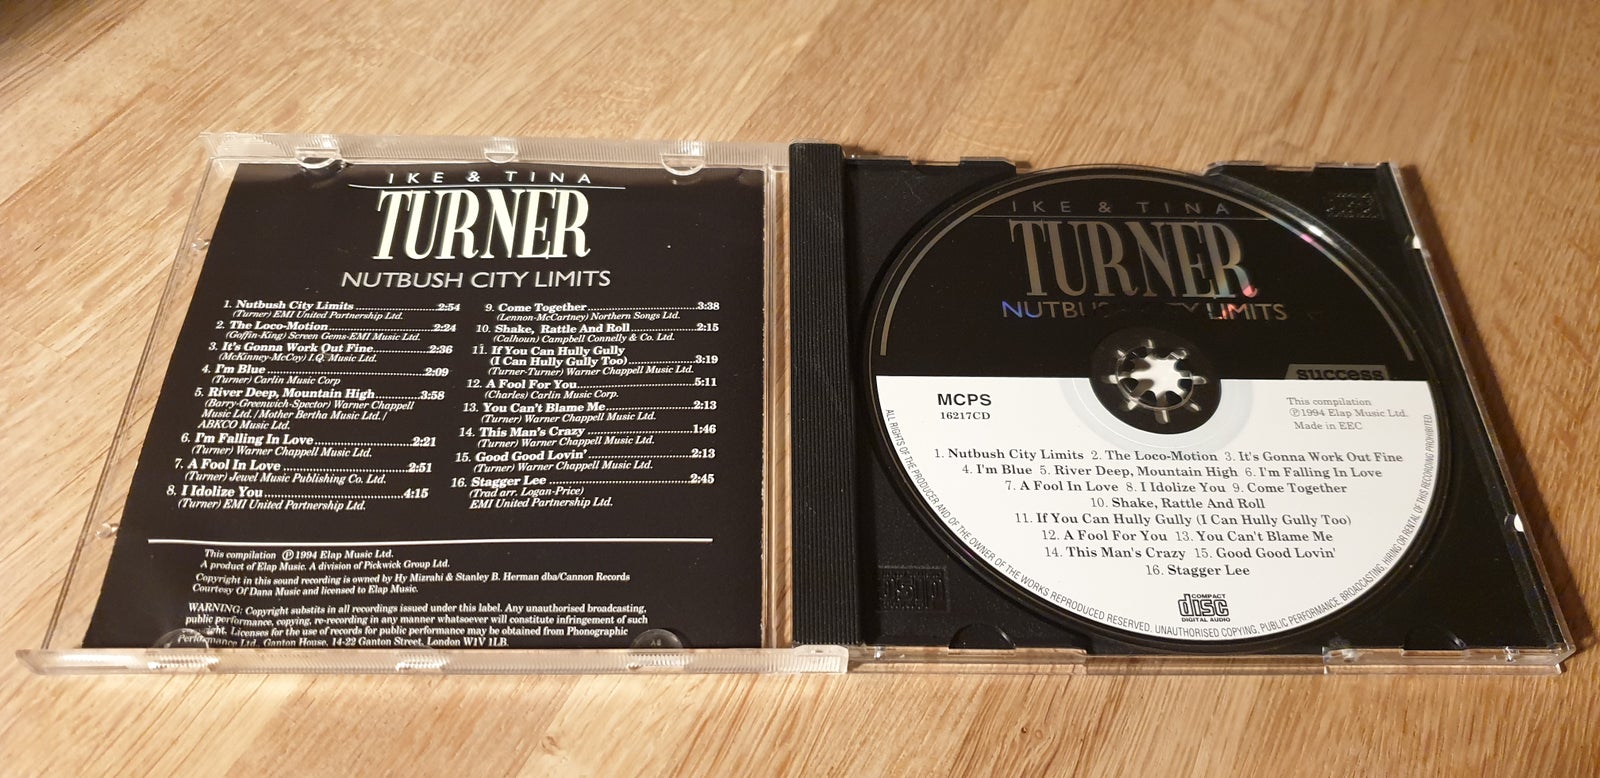 Ike & Tina Turner: Nutbush City Limits, rock